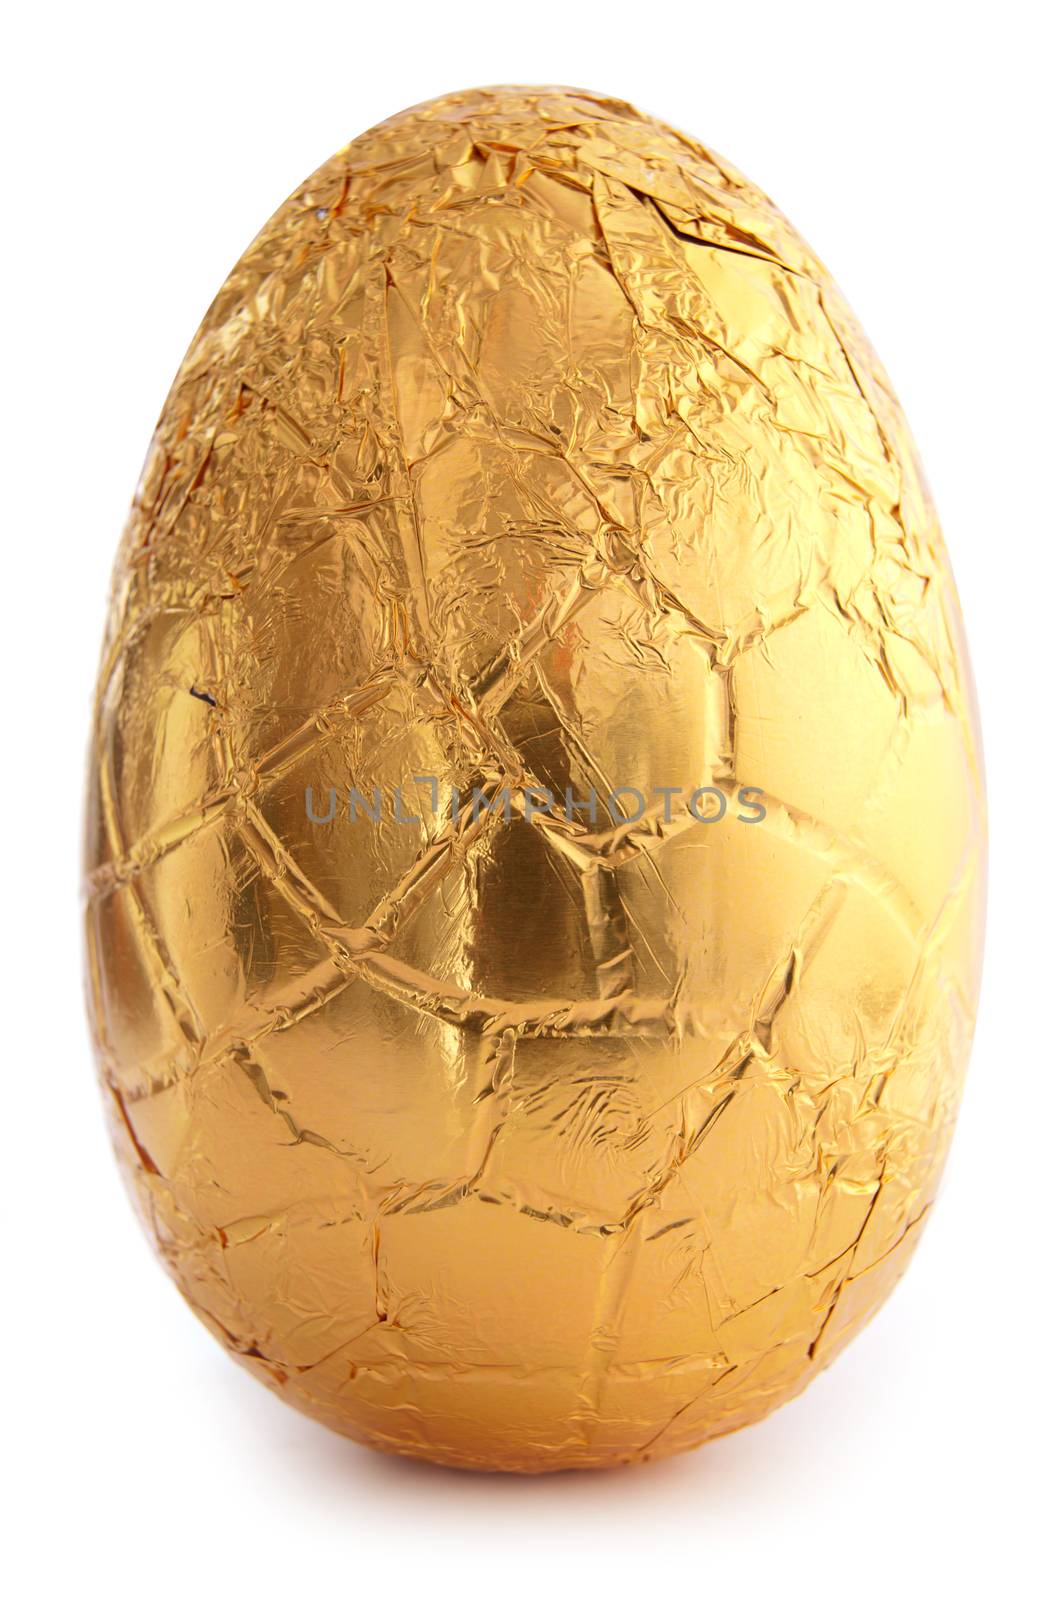 Gold easter egg over a white background